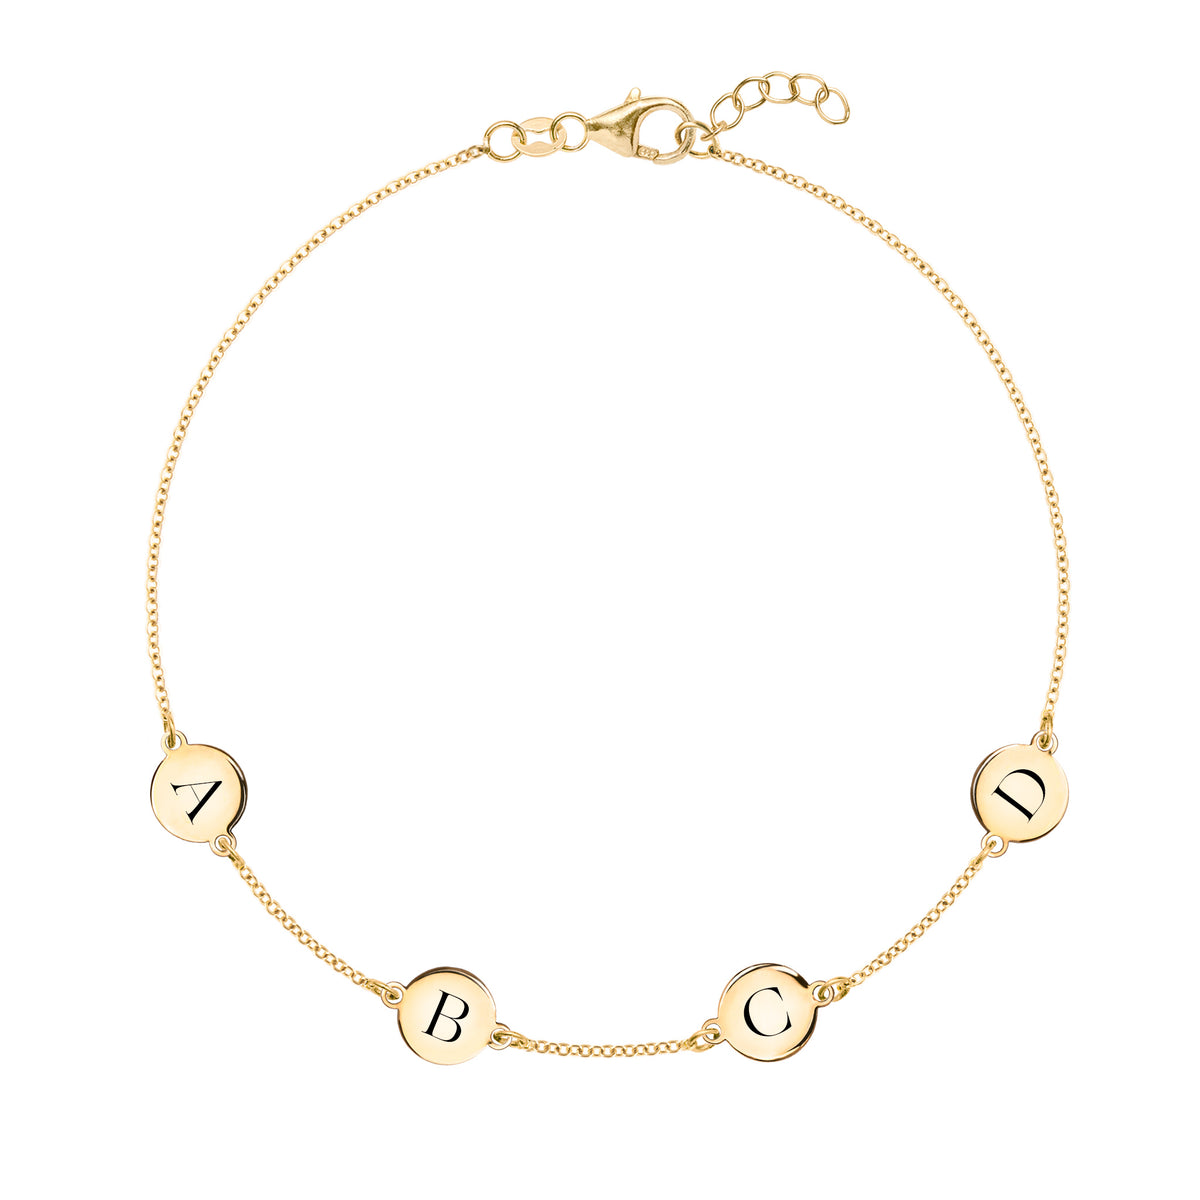 Personalized Cuff Bracelet, Cursive Cuff Bracelet, Custom Name Jewelry,  Bracelet for Woman, Gold Bracelet Gift, Personalized Name Bangle - Etsy |  Inspirational bracelets, Personalized cuff bracelets, Engraved bracelet